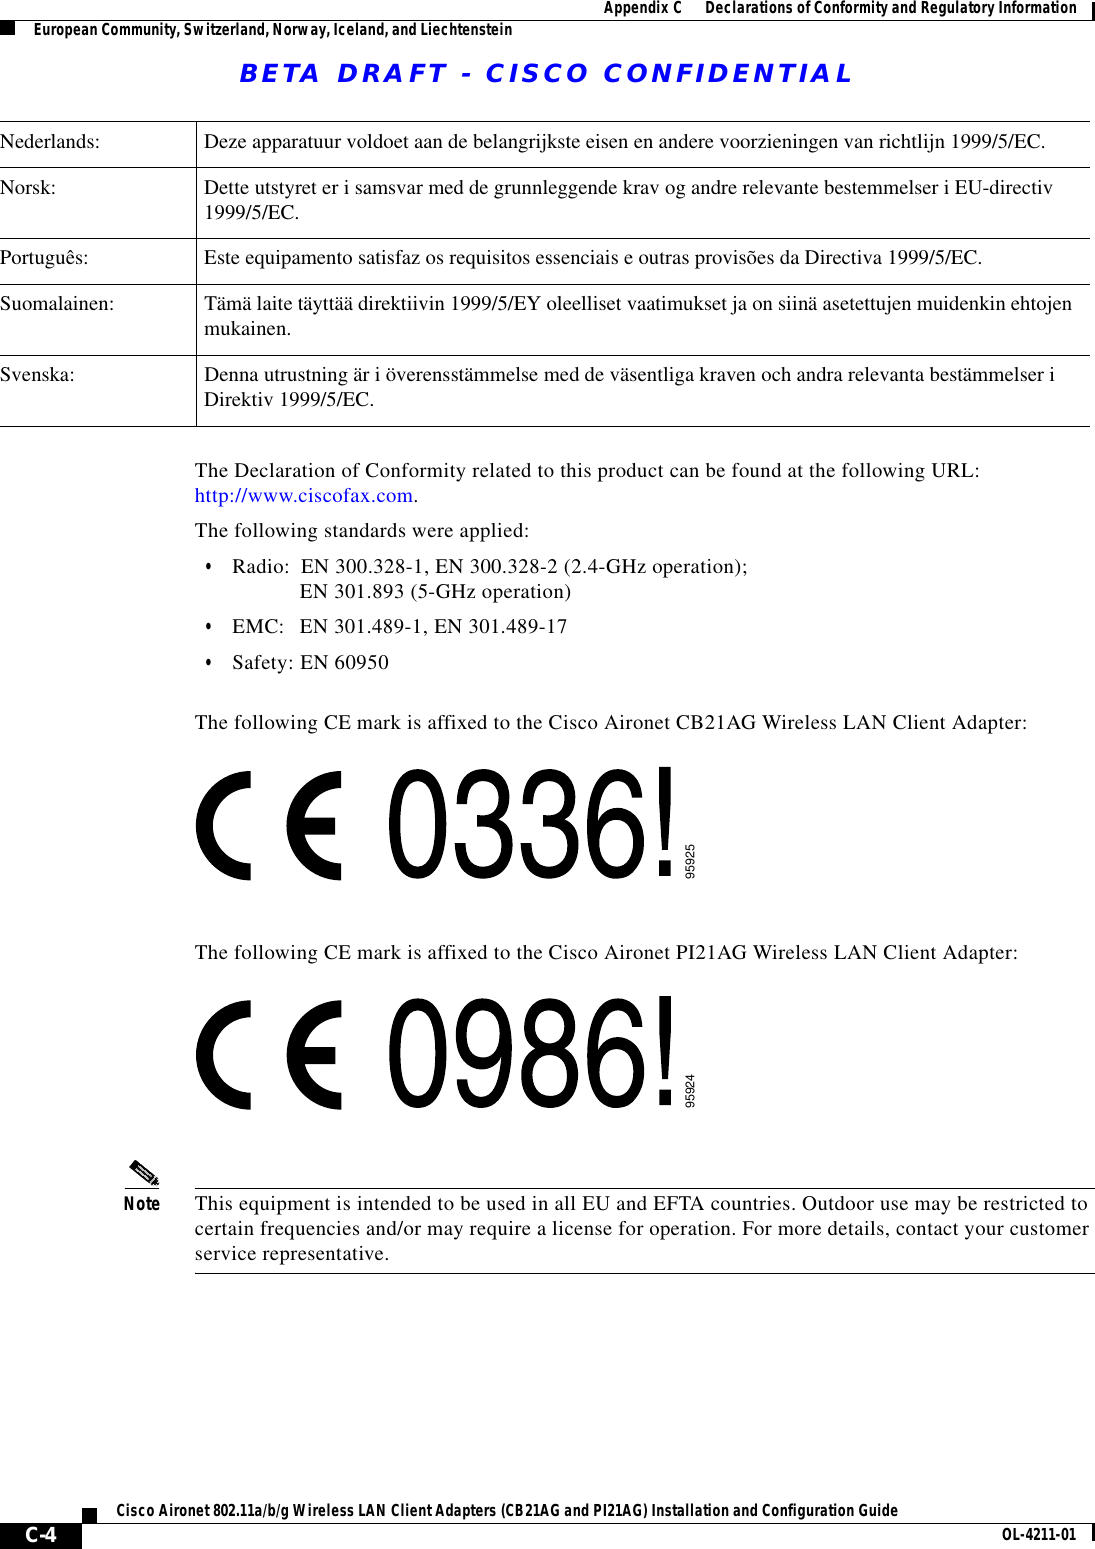 BETA DRAFT - CISCO CONFIDENTIAL C-4Cisco Aironet 802.11a/b/g Wireless LAN Client Adapters (CB21AG and PI21AG) Installation and Configuration Guide OL-4211-01Appendix C      Declarations of Conformity and Regulatory InformationEuropean Community, Switzerland, Norway, Iceland, and LiechtensteinThe Declaration of Conformity related to this product can be found at the following URL: http://www.ciscofax.com.The following standards were applied:•Radio: EN 300.328-1, EN 300.328-2 (2.4-GHz operation);EN 301.893 (5-GHz operation)•EMC: EN 301.489-1, EN 301.489-17•Safety: EN 60950The following CE mark is affixed to the Cisco Aironet CB21AG Wireless LAN Client Adapter:The following CE mark is affixed to the Cisco Aironet PI21AG Wireless LAN Client Adapter:Note This equipment is intended to be used in all EU and EFTA countries. Outdoor use may be restricted to certain frequencies and/or may require a license for operation. For more details, contact your customer service representative.Nederlands: Deze apparatuur voldoet aan de belangrijkste eisen en andere voorzieningen van richtlijn 1999/5/EC.Norsk: Dette utstyret er i samsvar med de grunnleggende krav og andre relevante bestemmelser i EU-directiv 1999/5/EC.Português: Este equipamento satisfaz os requisitos essenciais e outras provisões da Directiva 1999/5/EC.Suomalainen: Tämä laite täyttää direktiivin 1999/5/EY oleelliset vaatimukset ja on siinä asetettujen muidenkin ehtojen mukainen.Svenska: Denna utrustning är i överensstämmelse med de väsentliga kraven och andra relevanta bestämmelser i Direktiv 1999/5/EC.9592595924